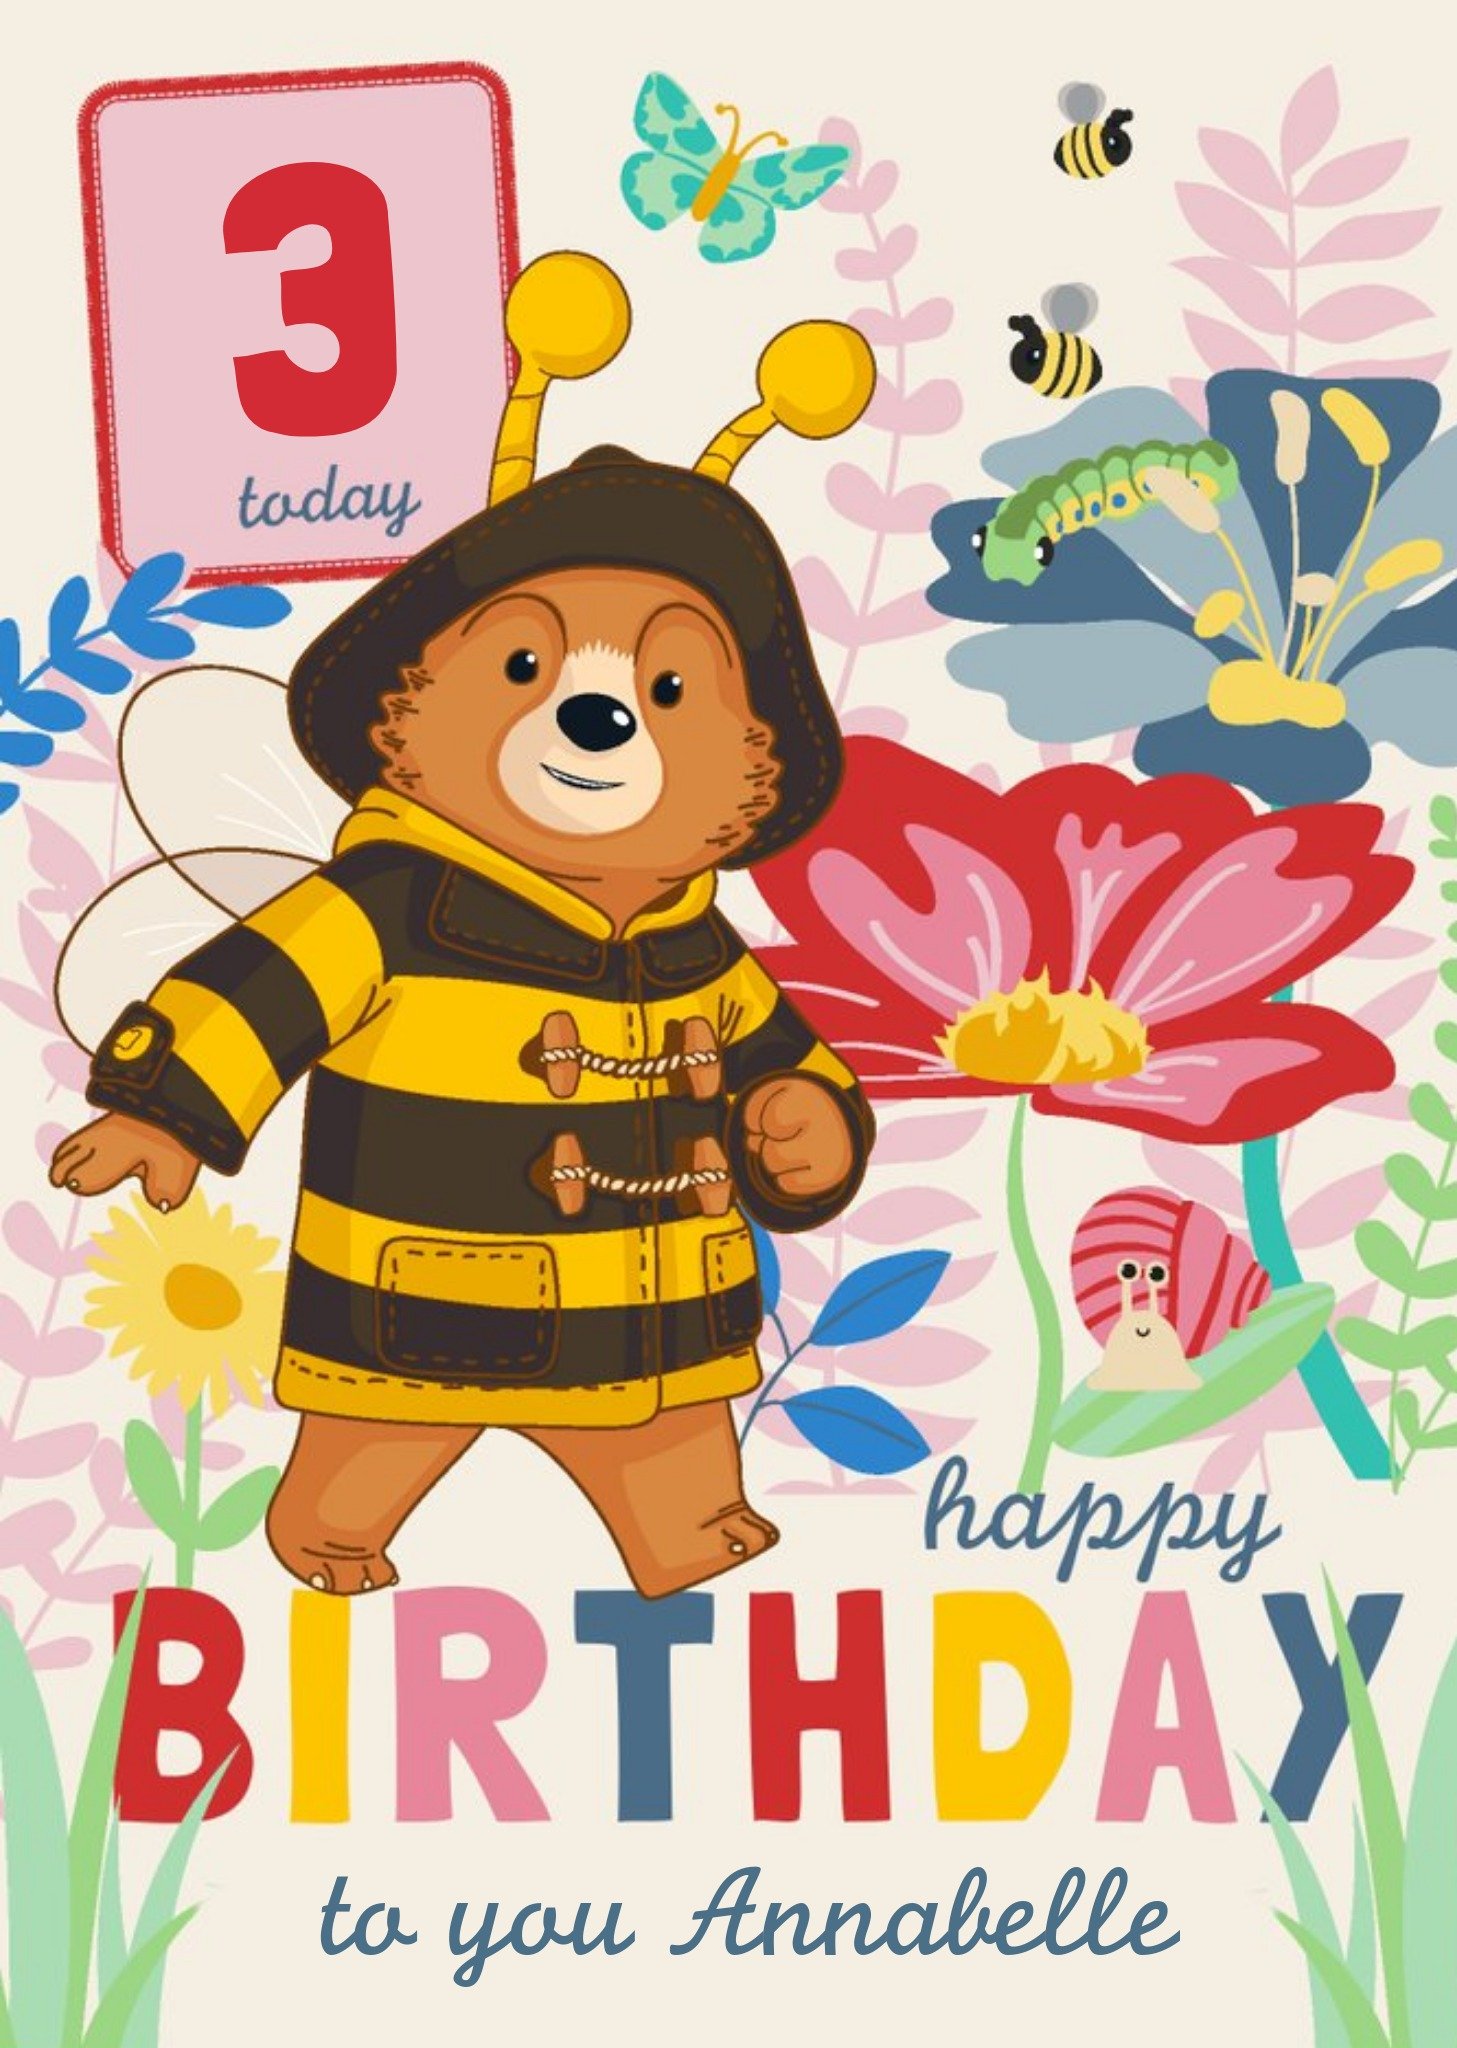 Paddington Bear Bumblebee Paddington Personalised Age 3 Today Birthday Card Ecard